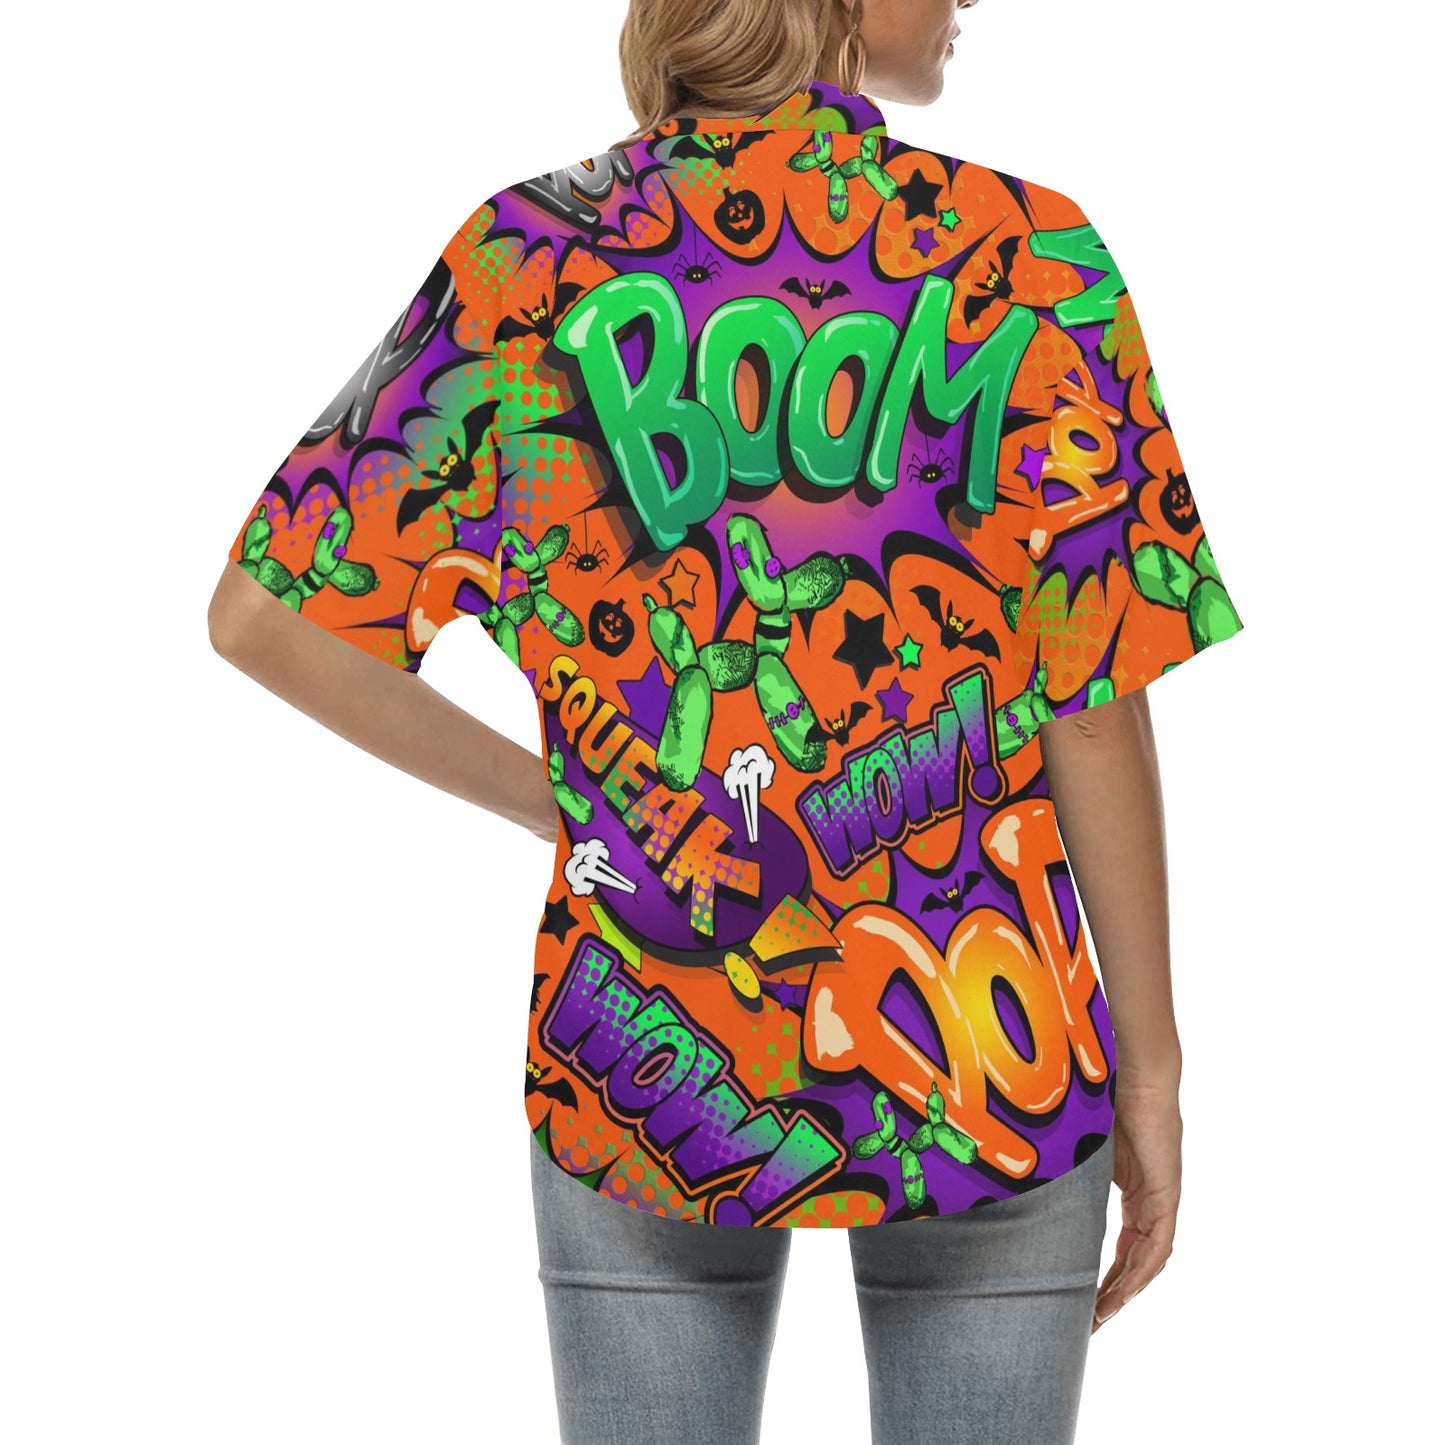 Balloon Twister Shirt for Ladies Halloween Design